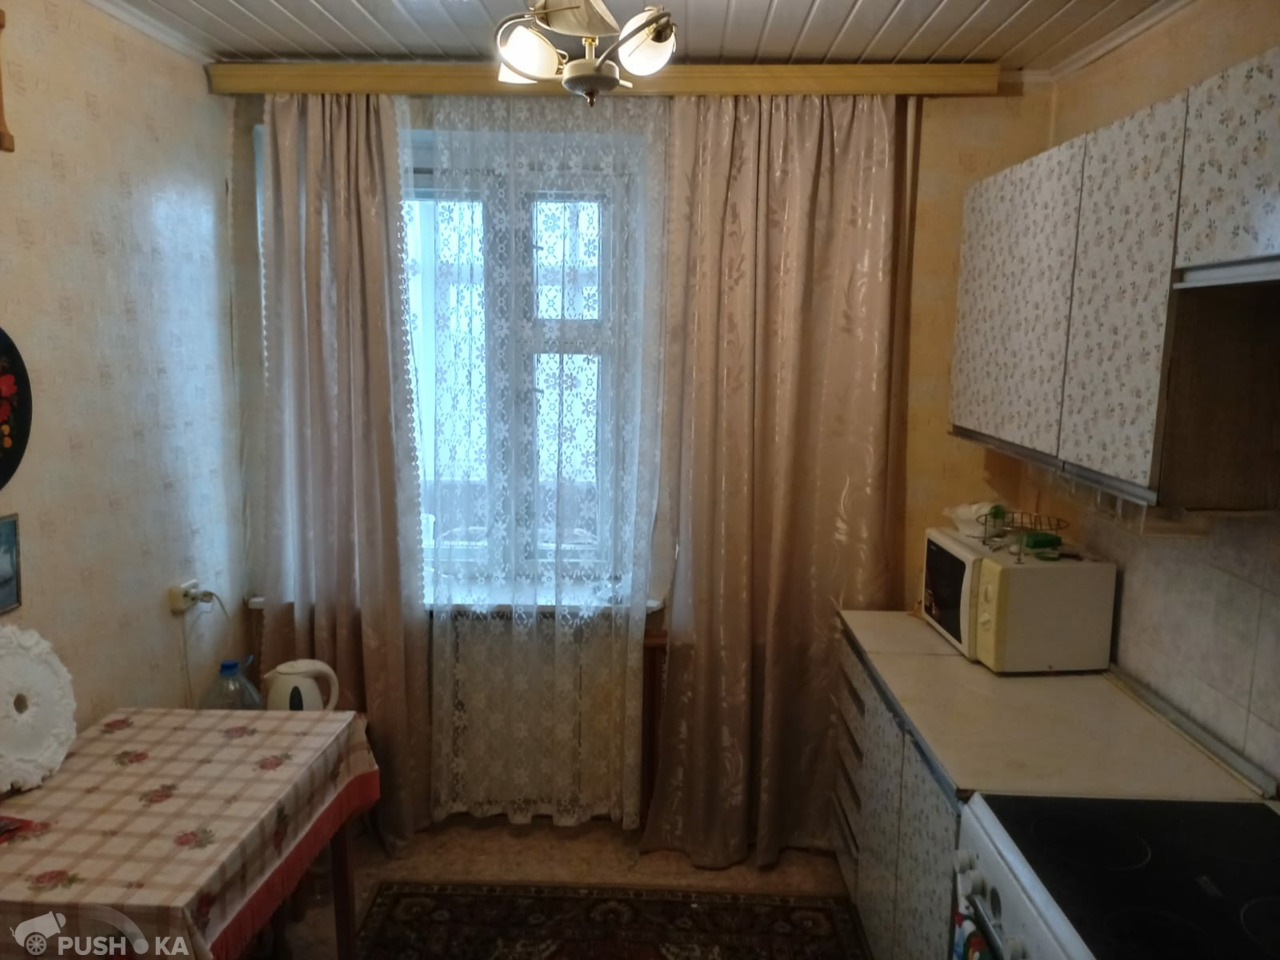 Продаётся 2-комнатная квартира 48.0 кв.м. этаж 8/10 за 3 800 000 руб 